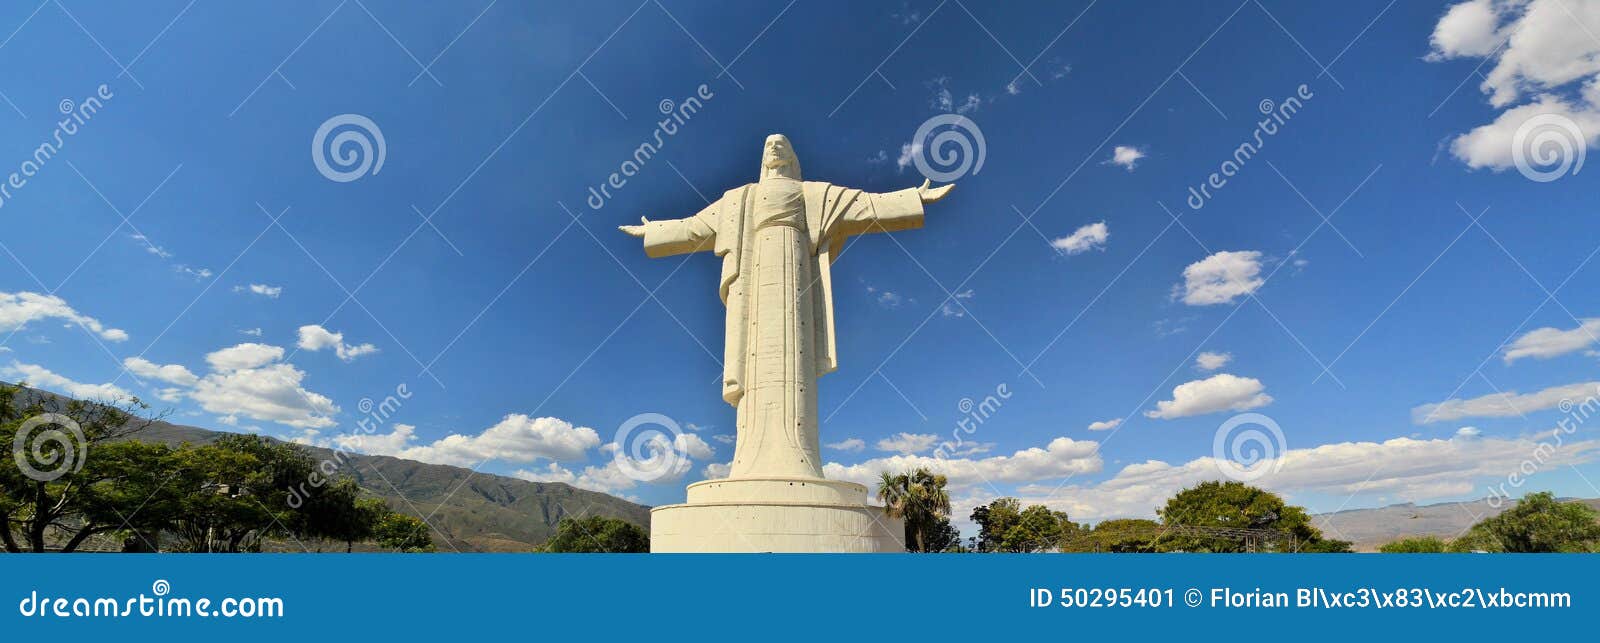 largest jesus statue worldwide, cochabamba bolivia